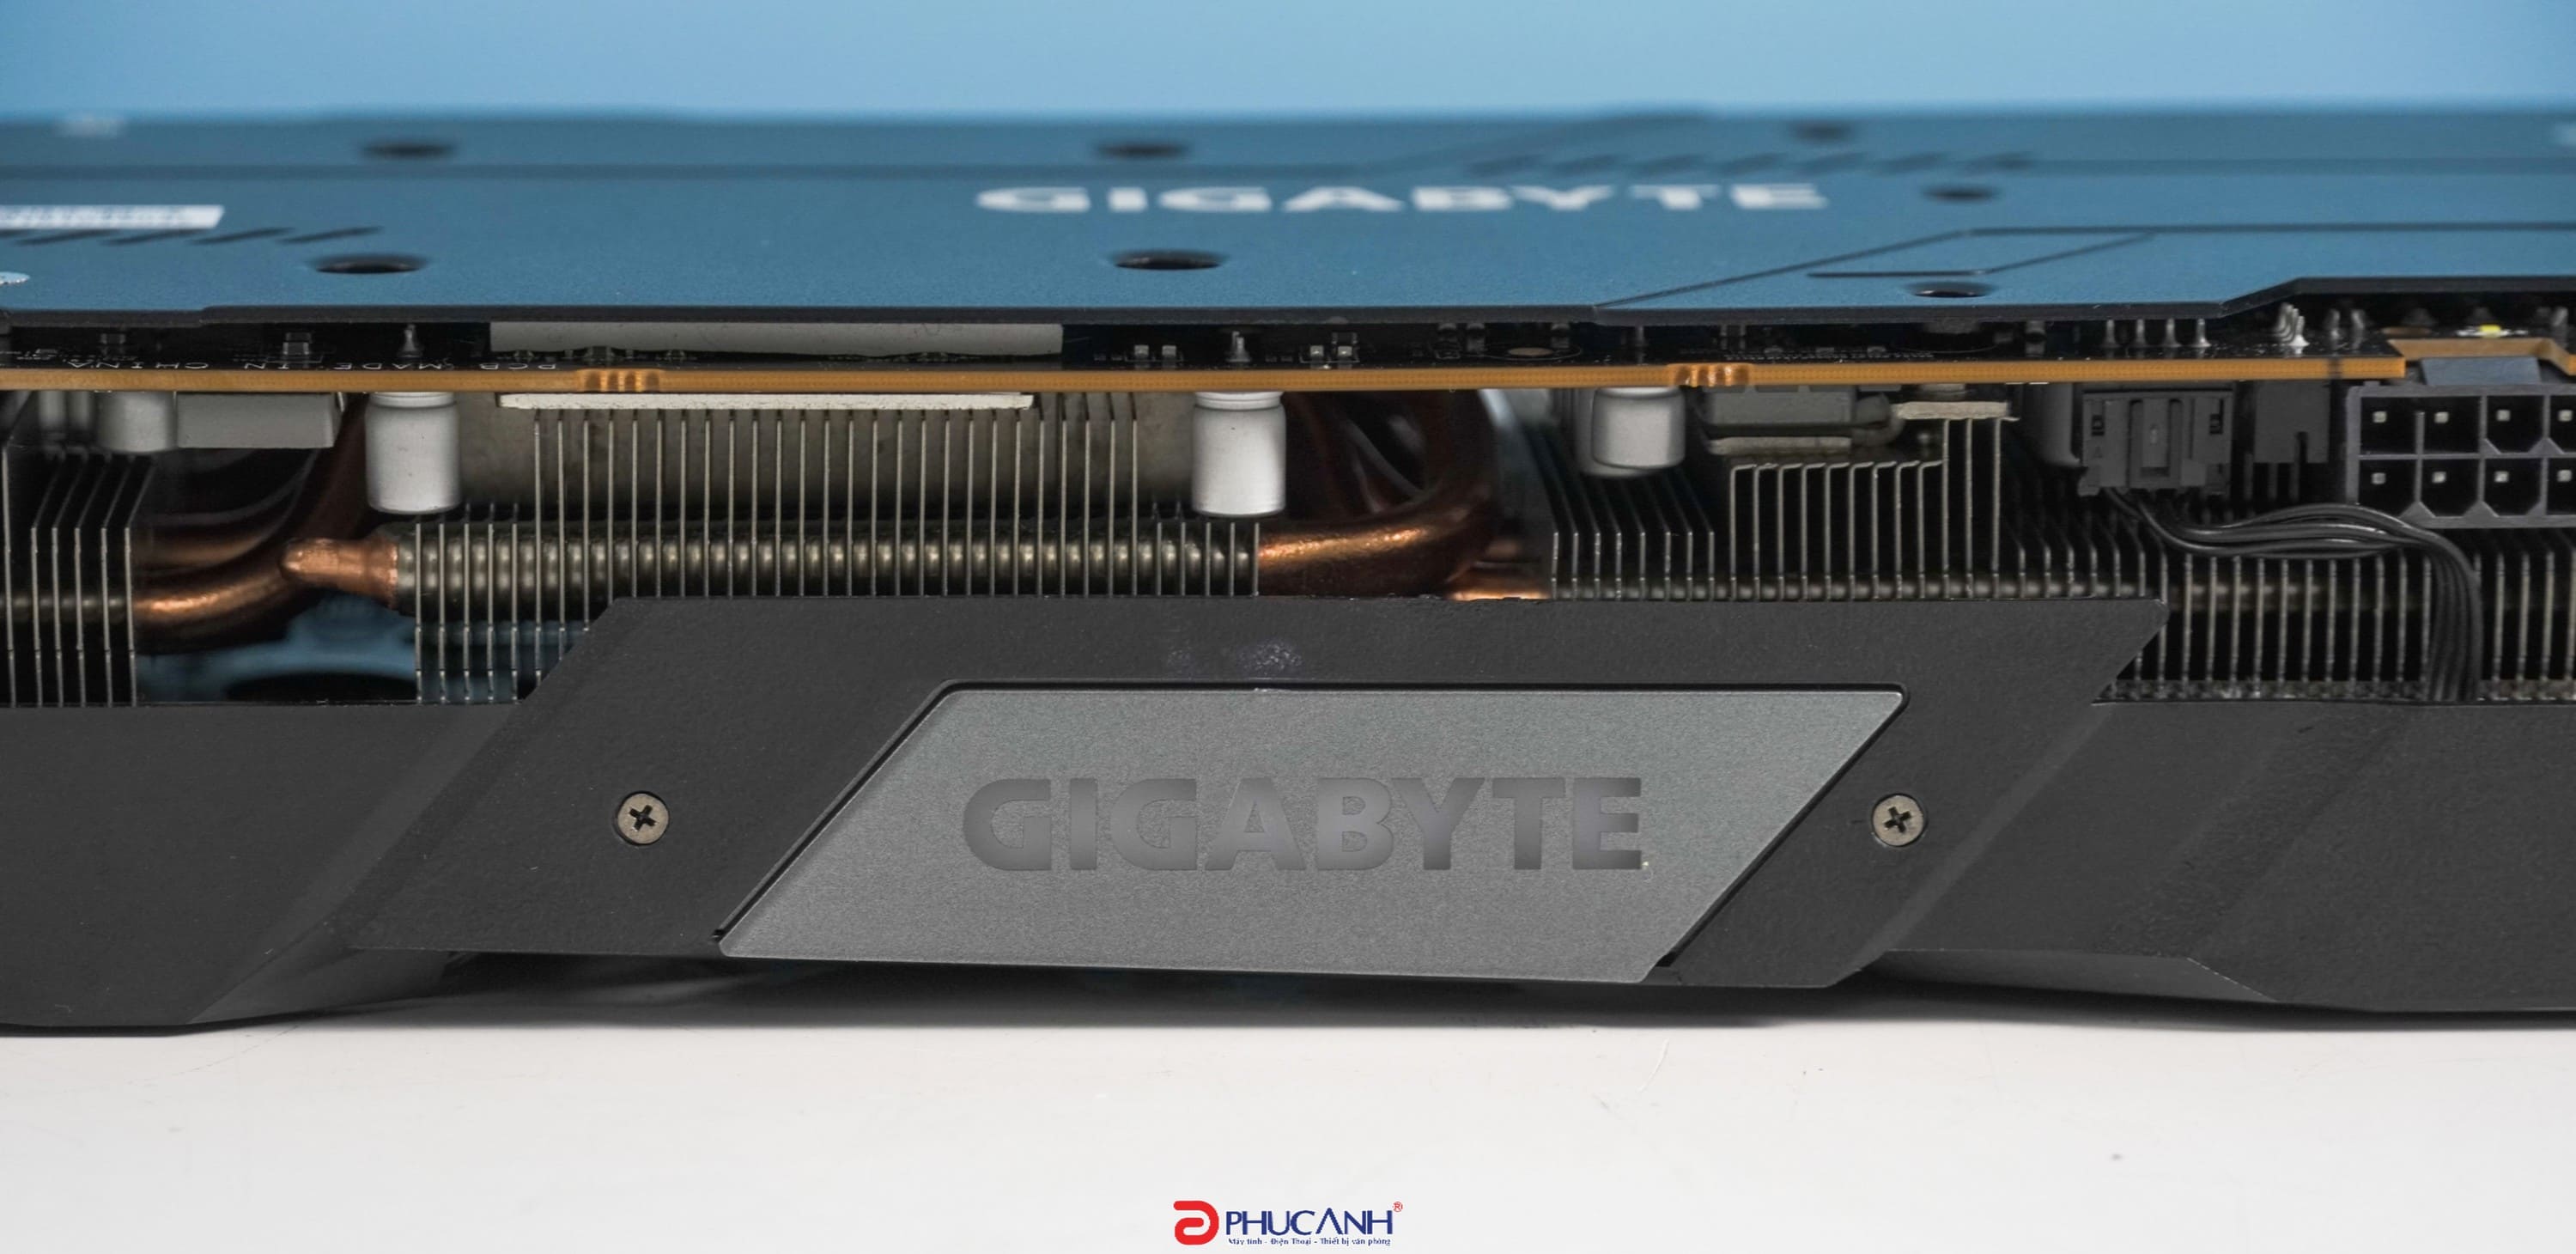 Review Gigabyte RX 5600 XT Gaming OC 6G